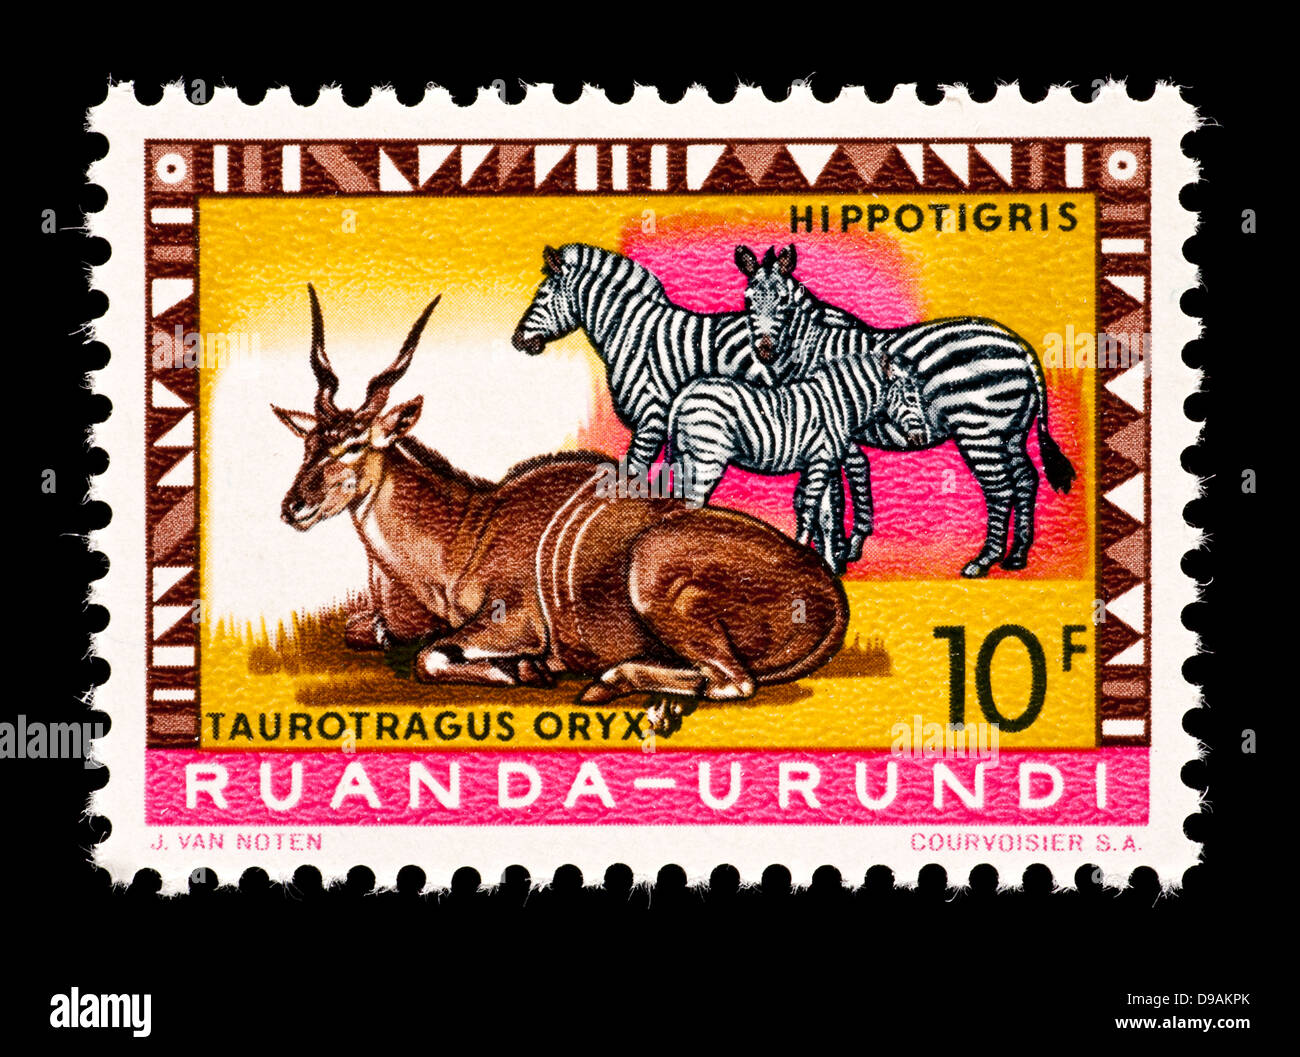 Postage stamp from Ruanda-Urundi  depicting depicting oryx and zebras Stock Photo